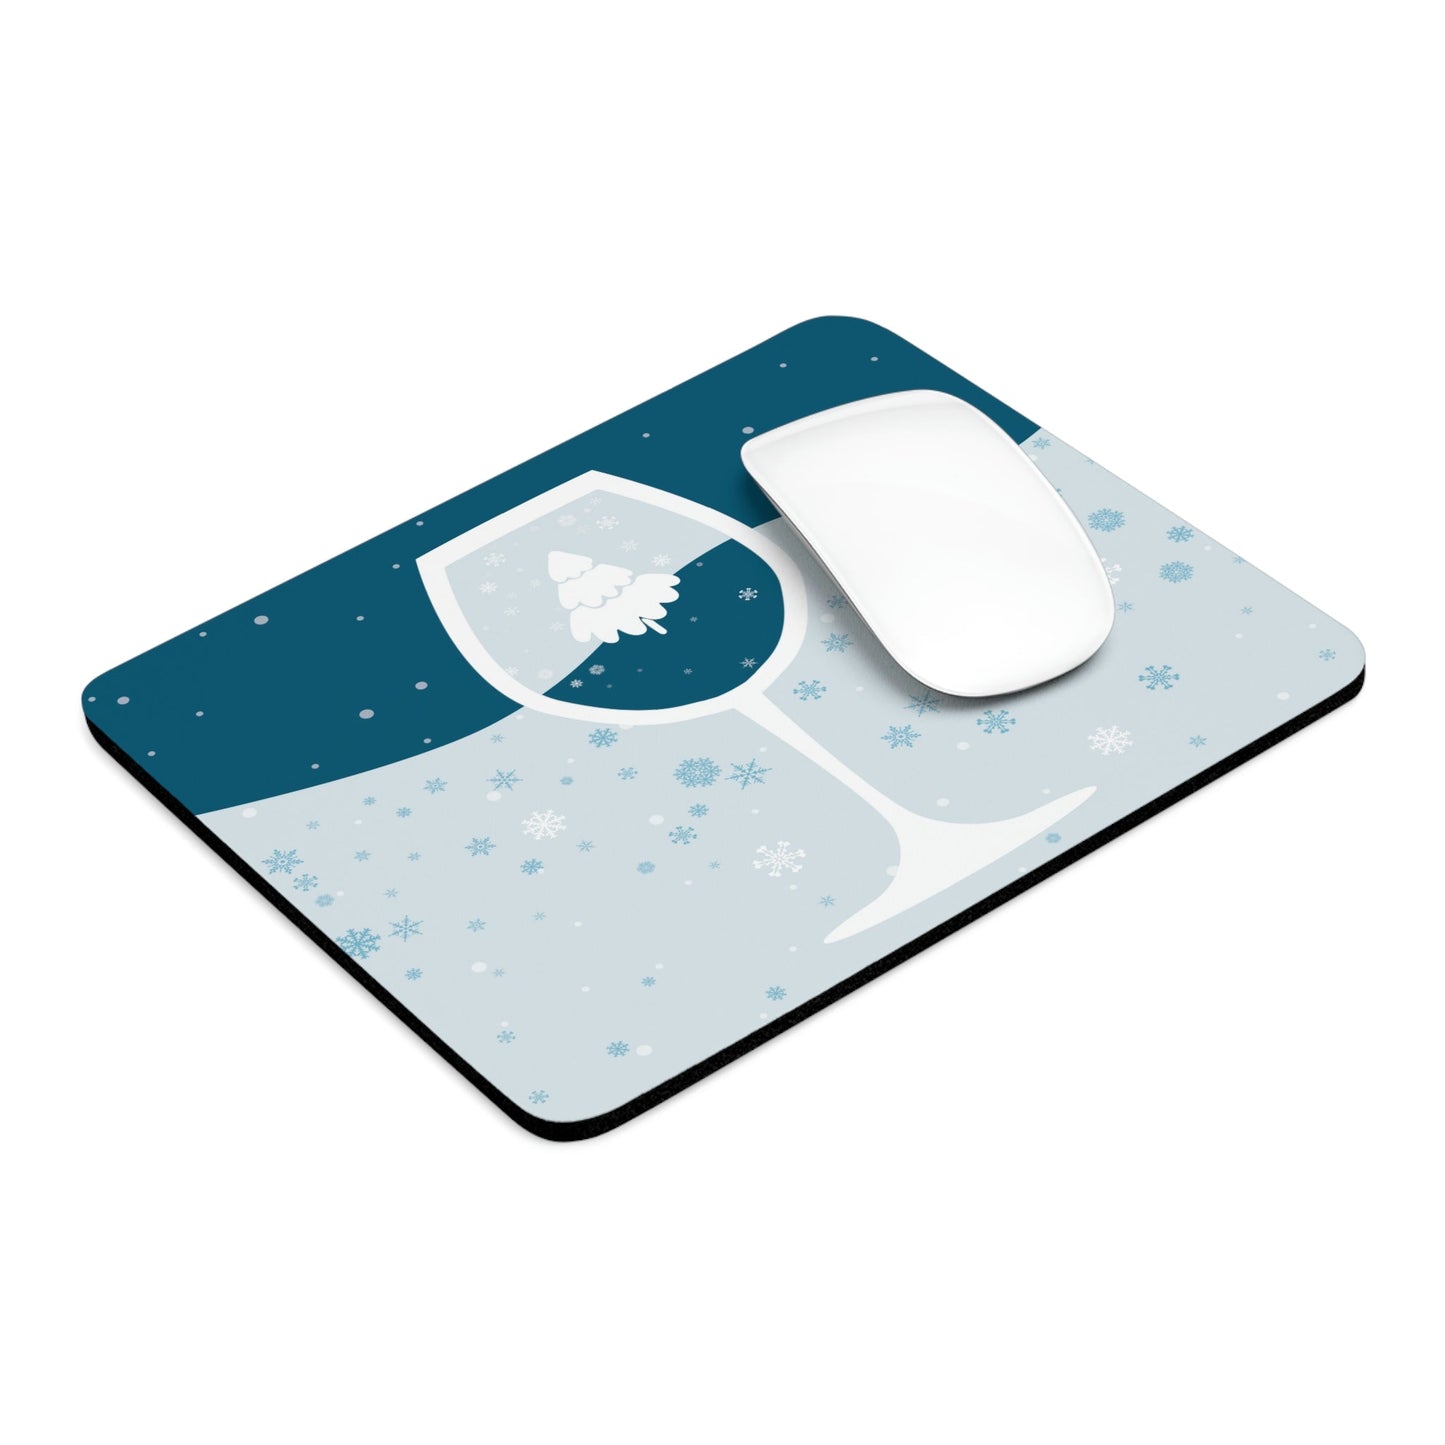 Ice Wine Winter Holidays Art Ergonomic Non-slip Creative Design Mouse Pad Ichaku [Perfect Gifts Selection]